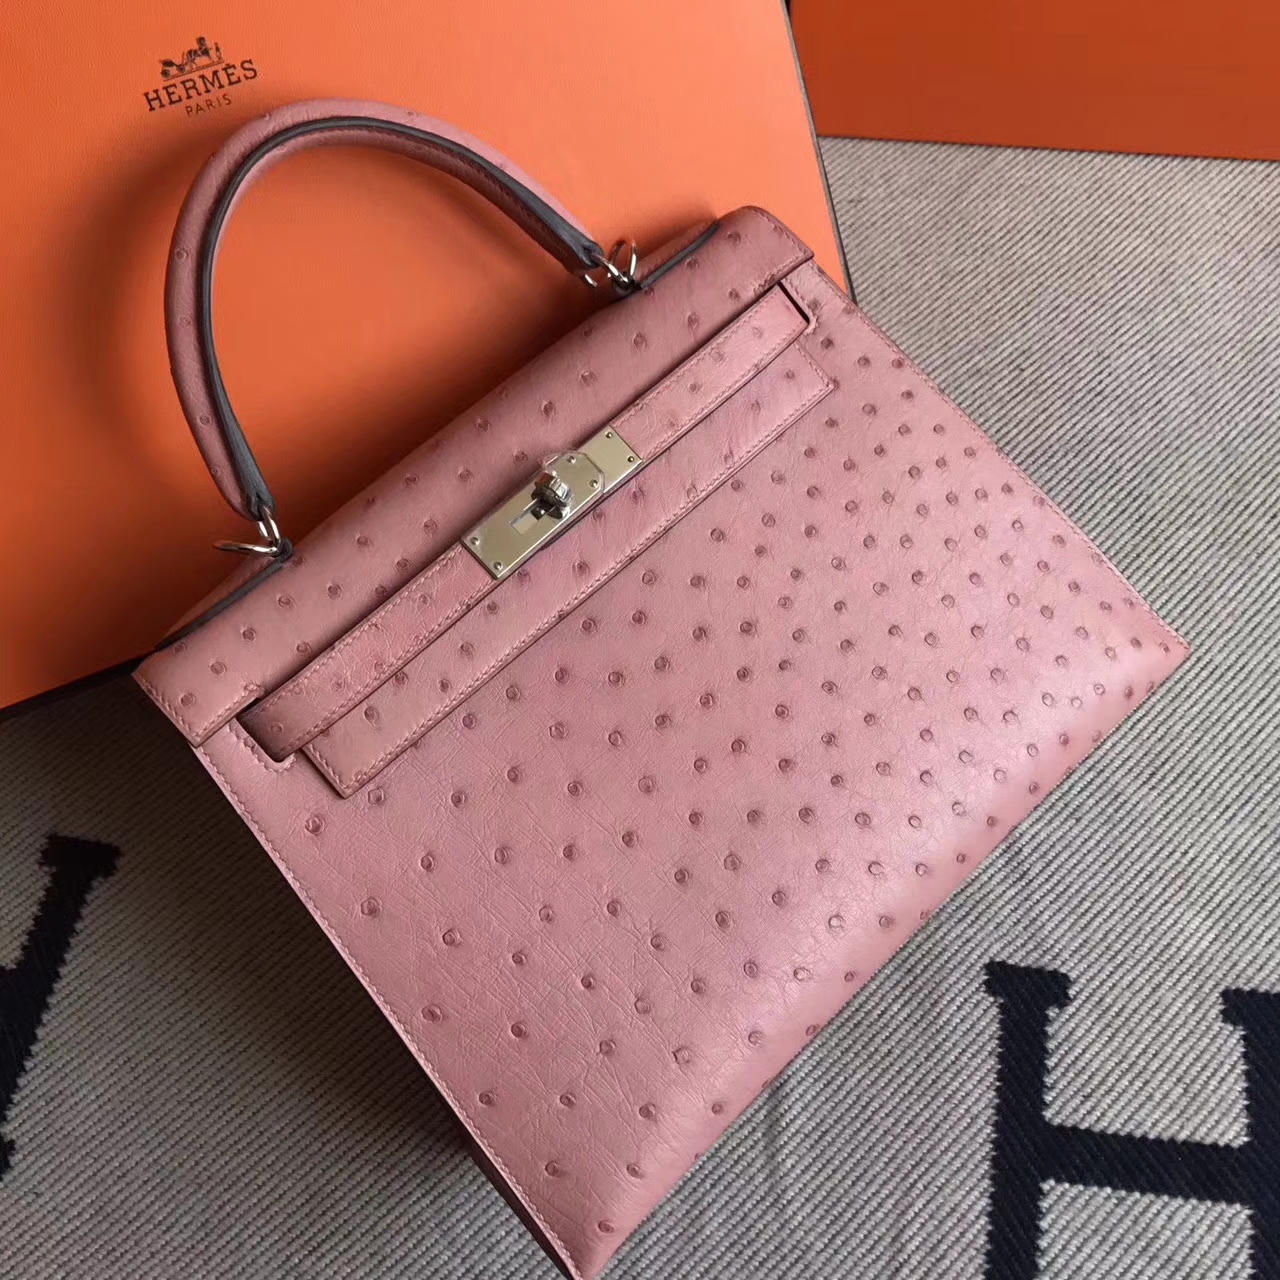 Discount Hermes CC94 Terre Cuite Ostrich Leather Sellier Kelly28cm Handbag